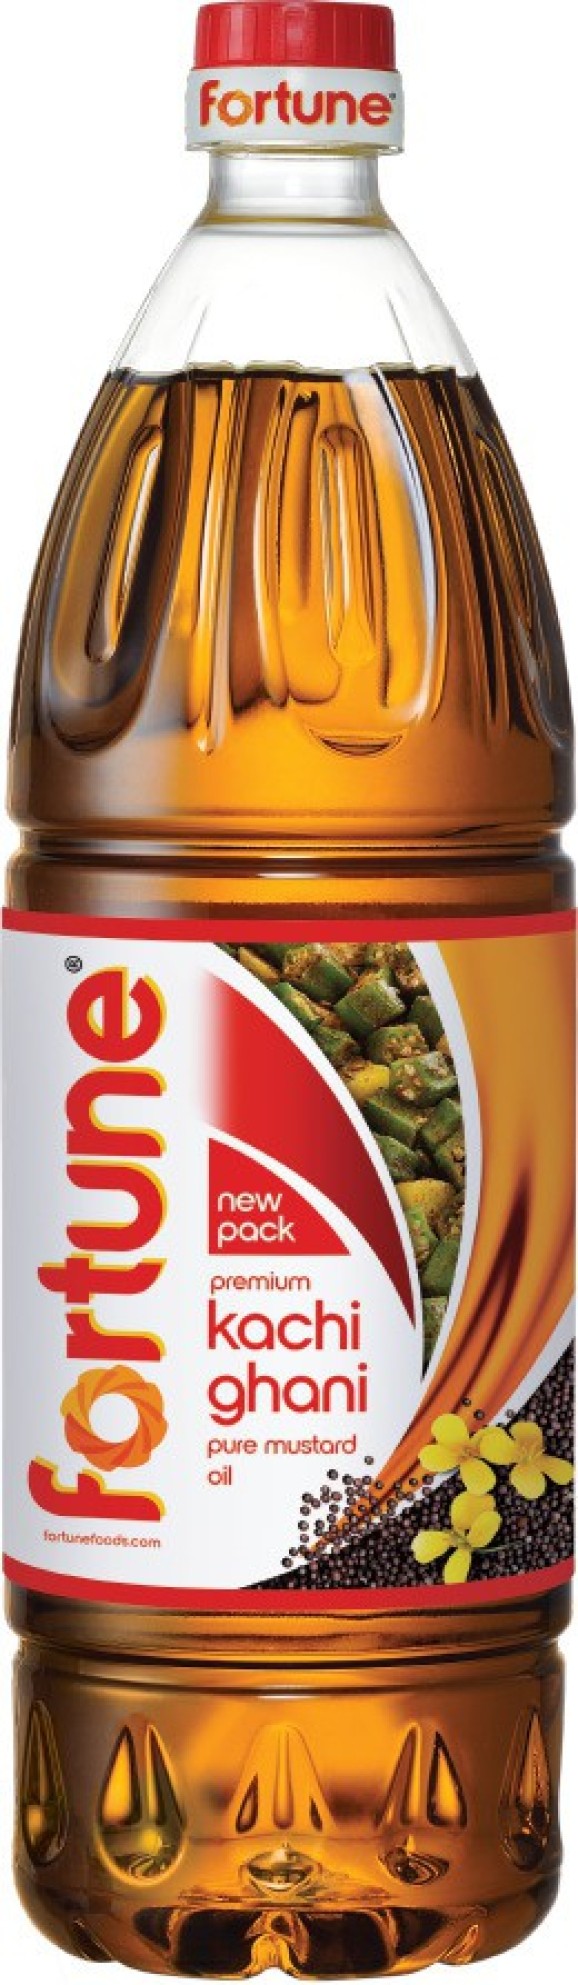 Fortune Premium Kachi Ghani Pure Mustard Oil, Bottle (1L)